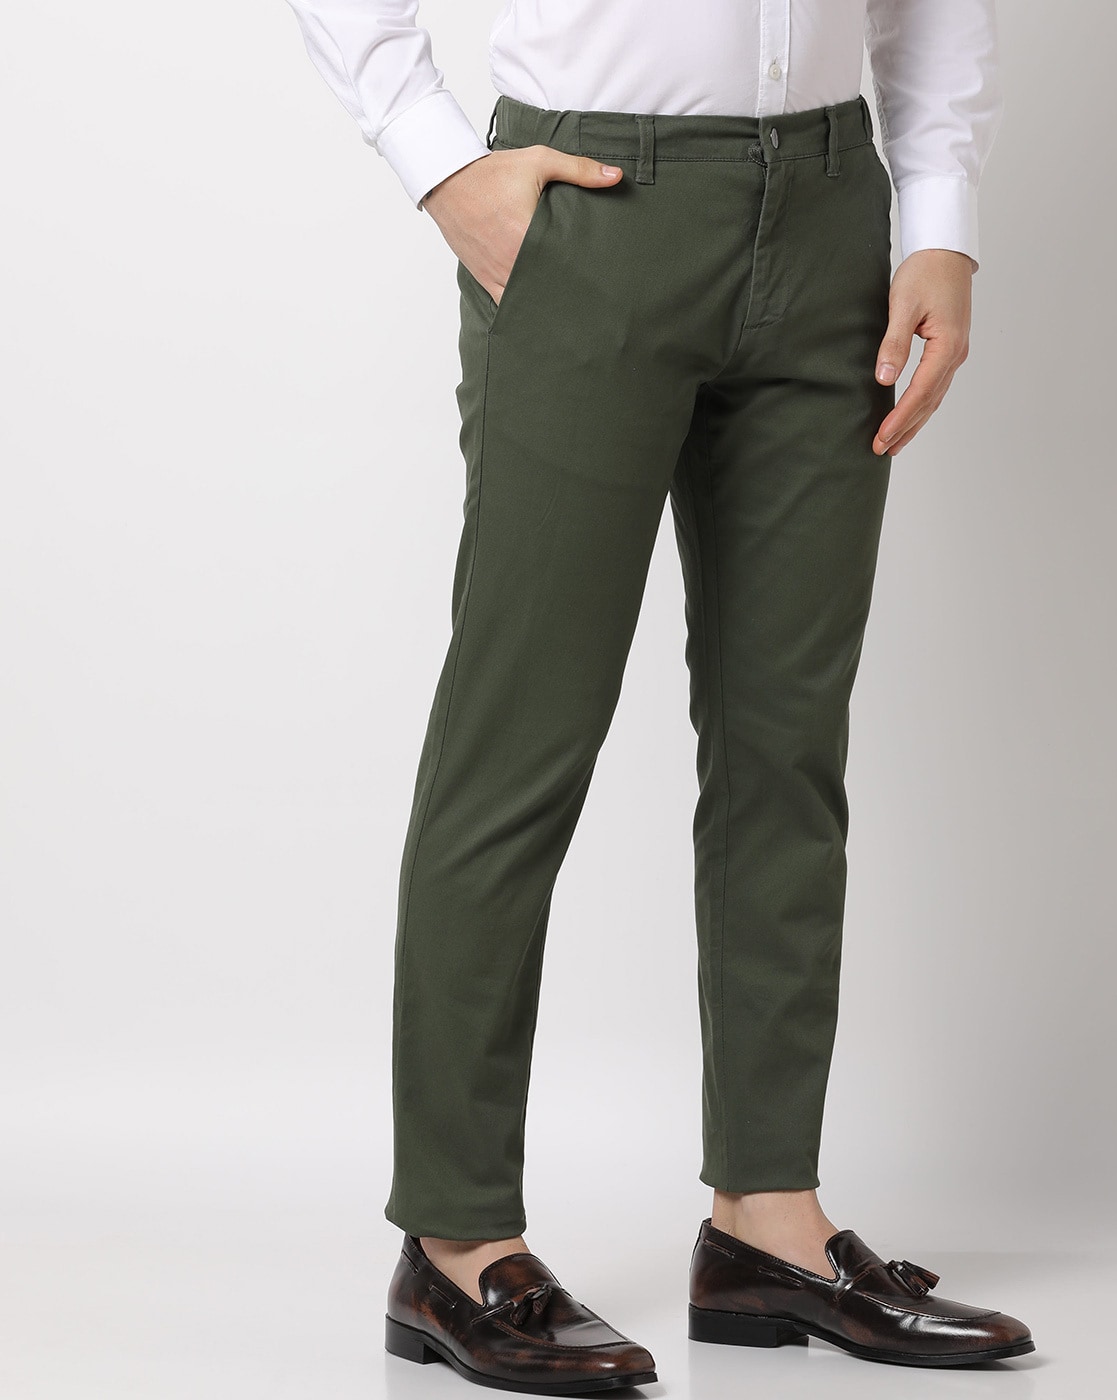 Plus Size Olive Pants Outfits - Alexa Webb